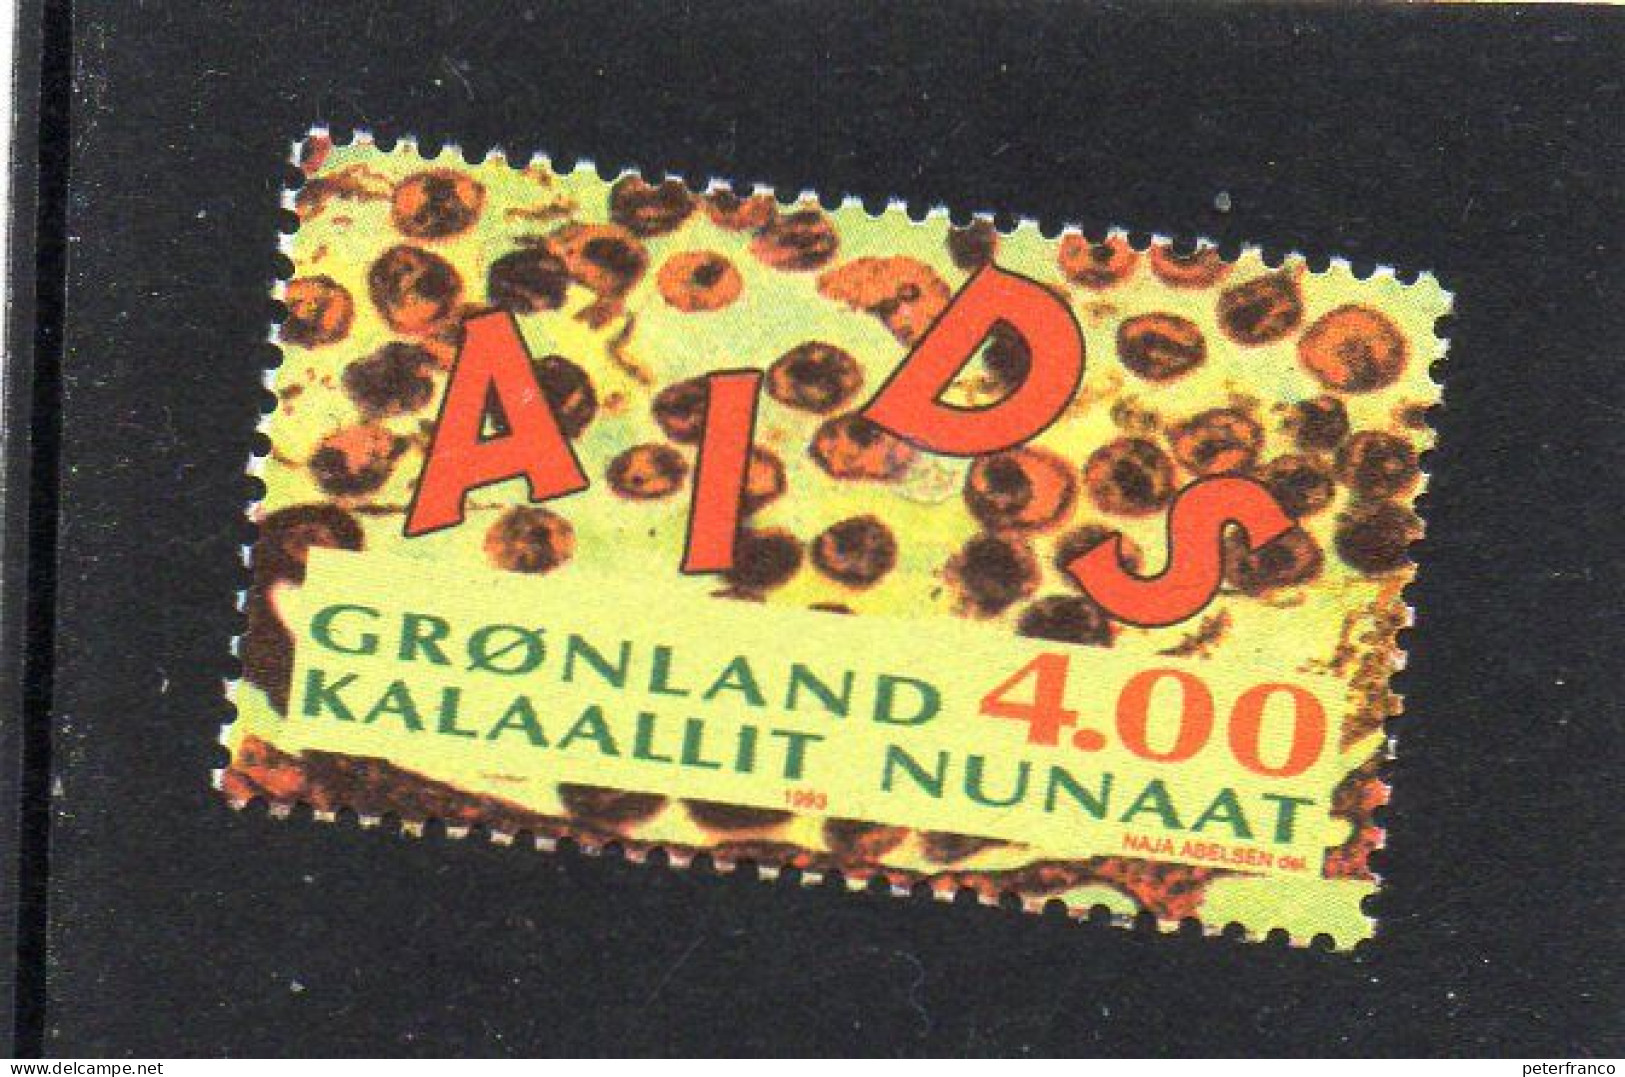 1993 Groenlandia - Lotta Contro L'AIDS - Ongebruikt